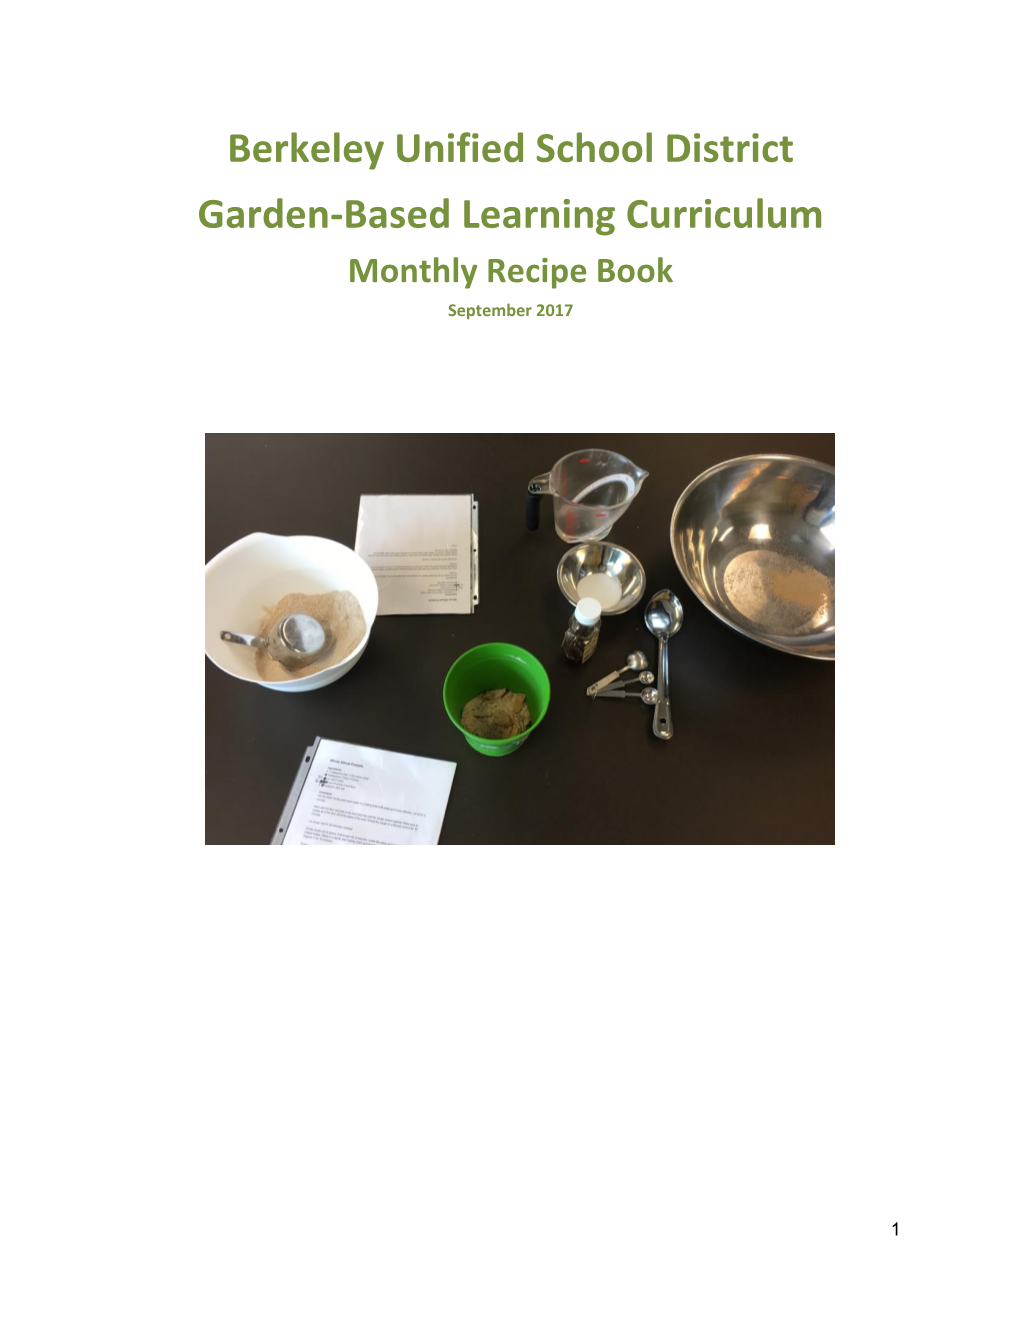 Berkeley Unified School District Garden-Based Learning Curriculum